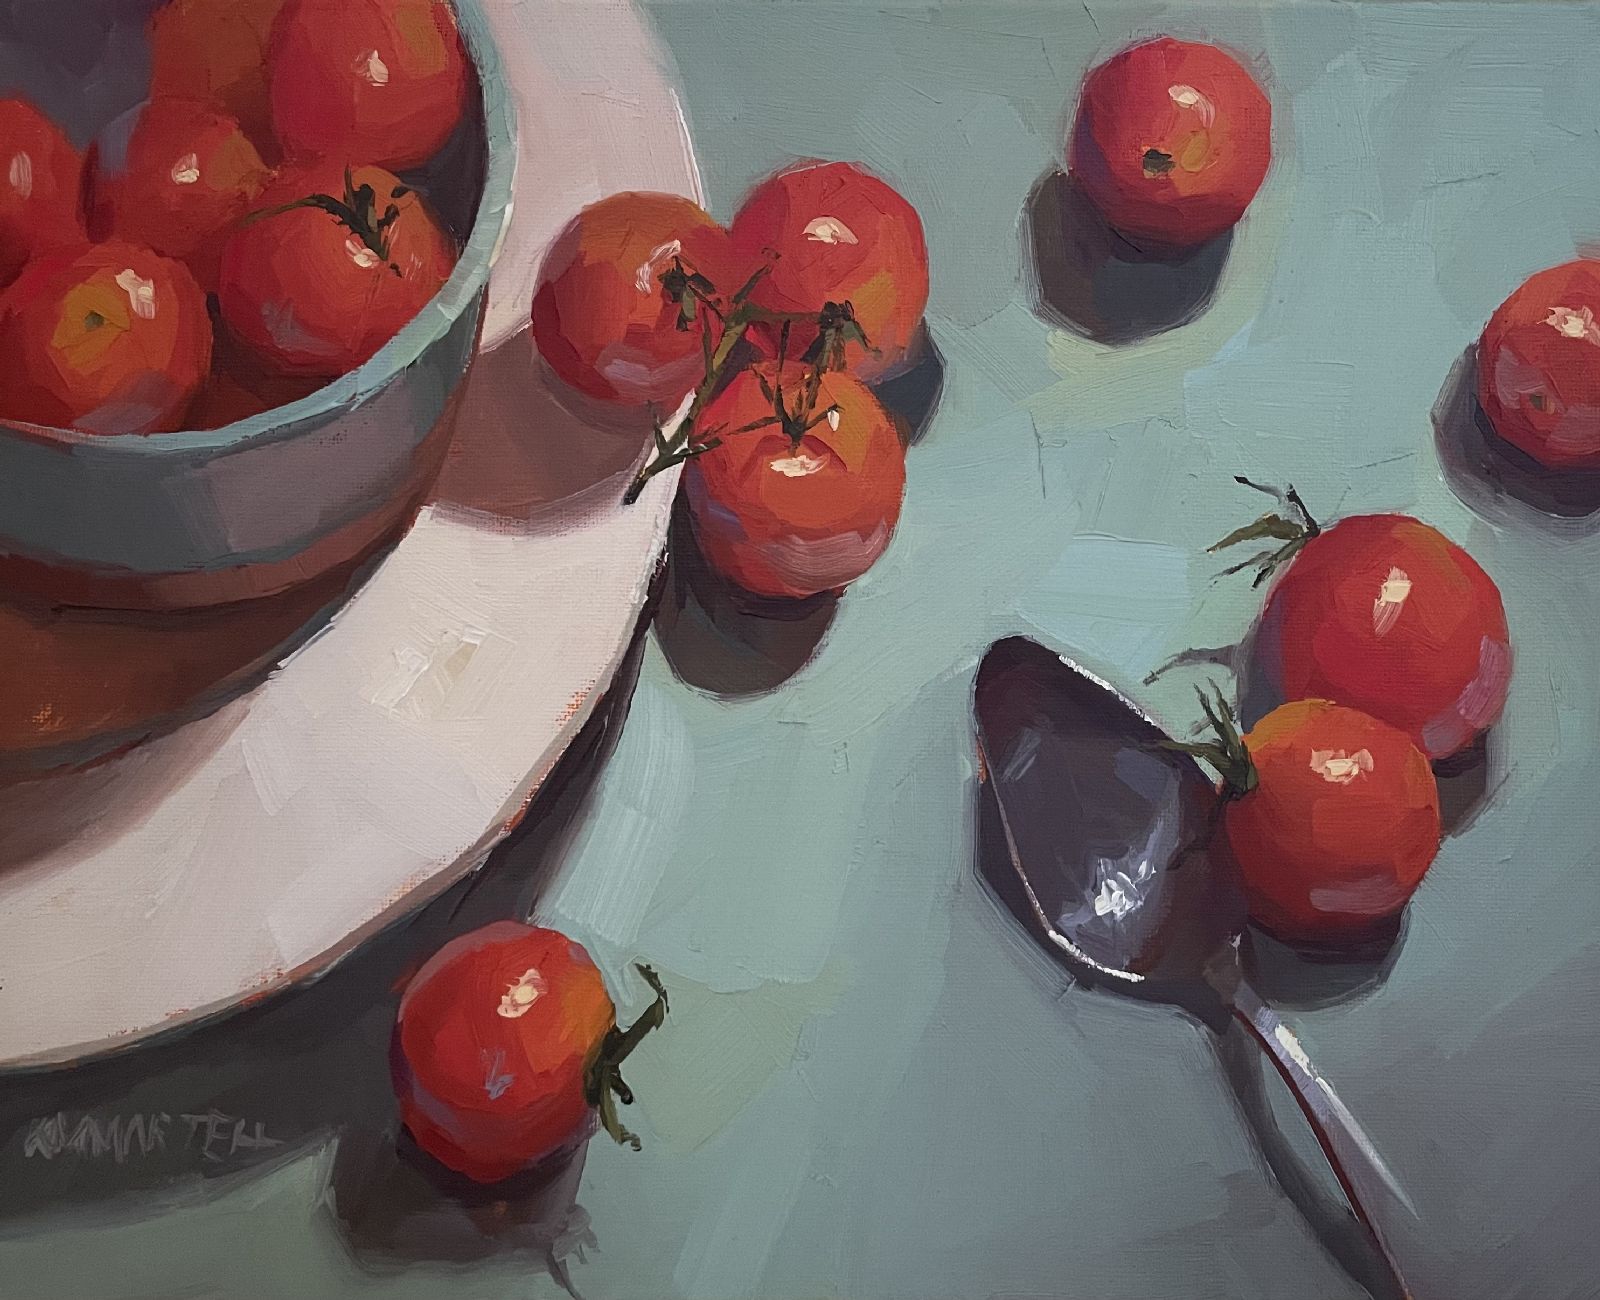  Tomato Party by Kayla Martell